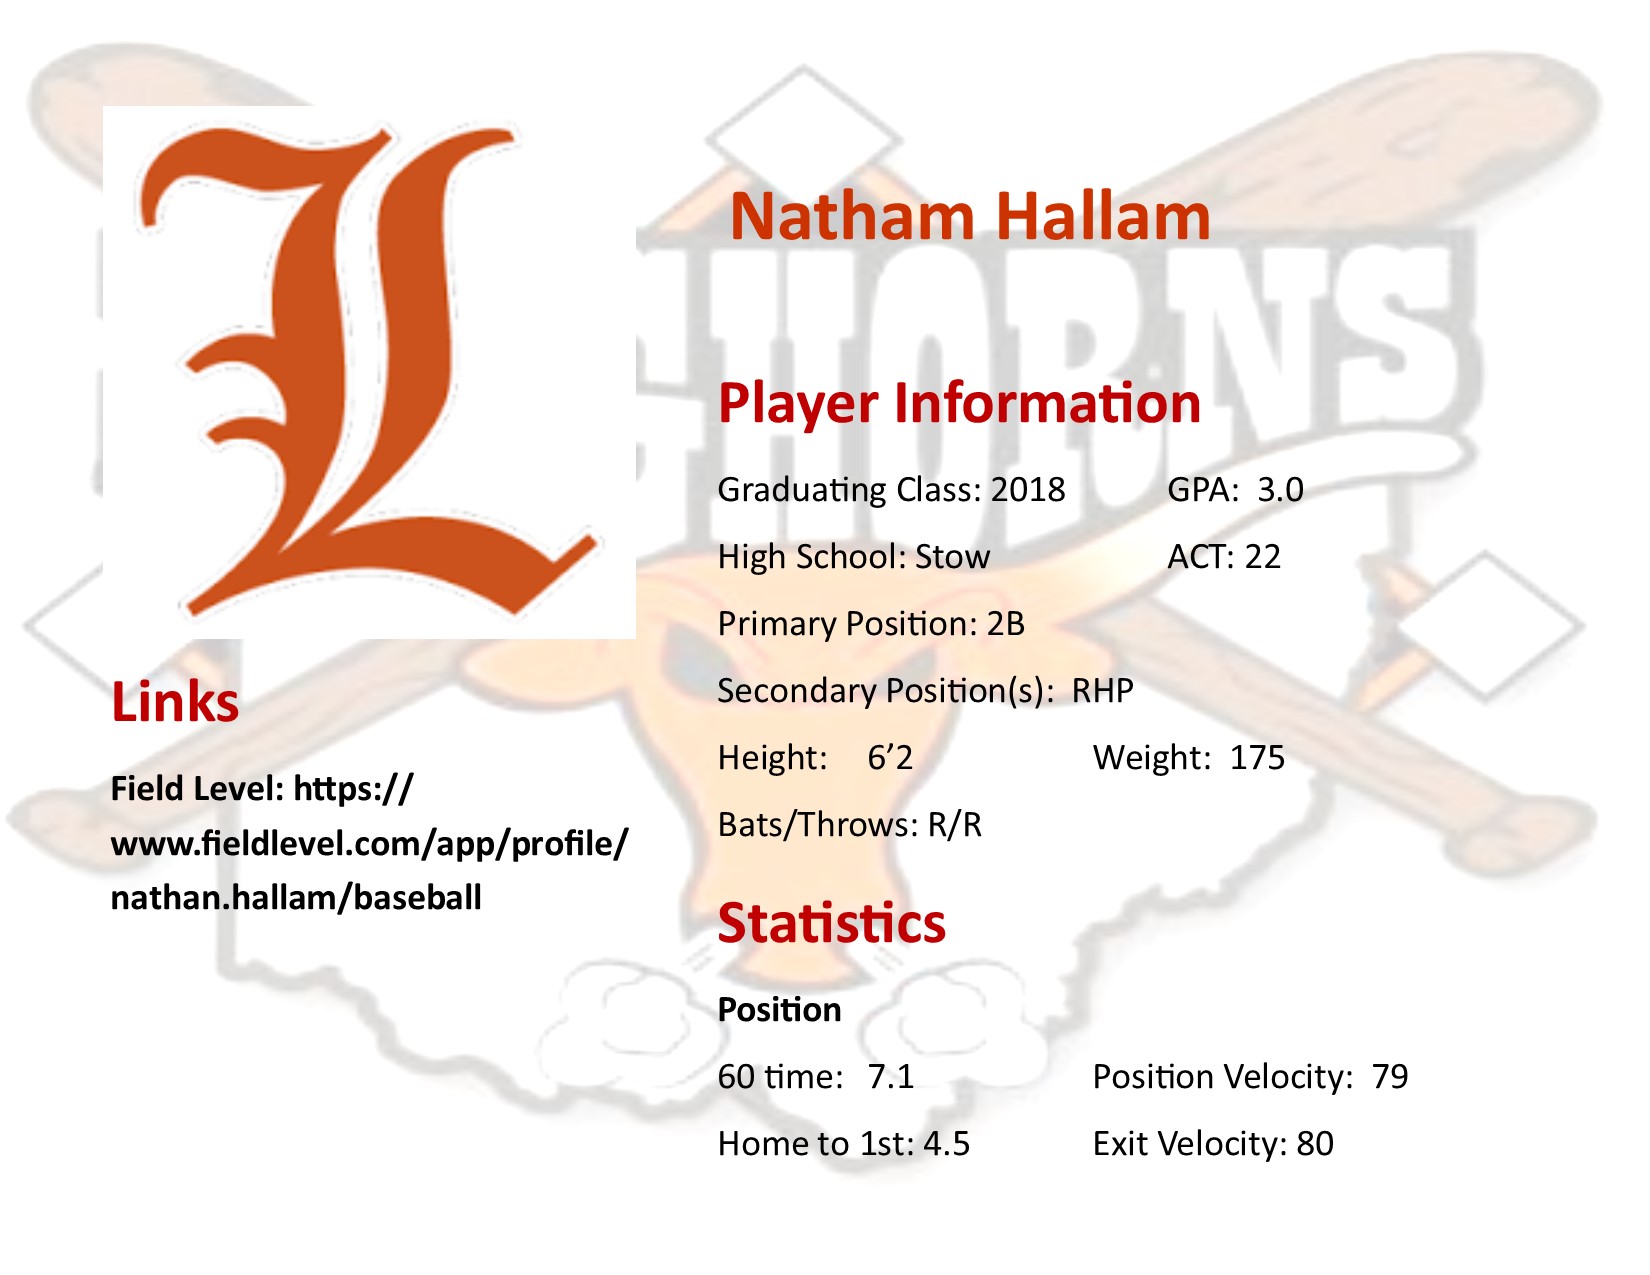 Nathan Hallam